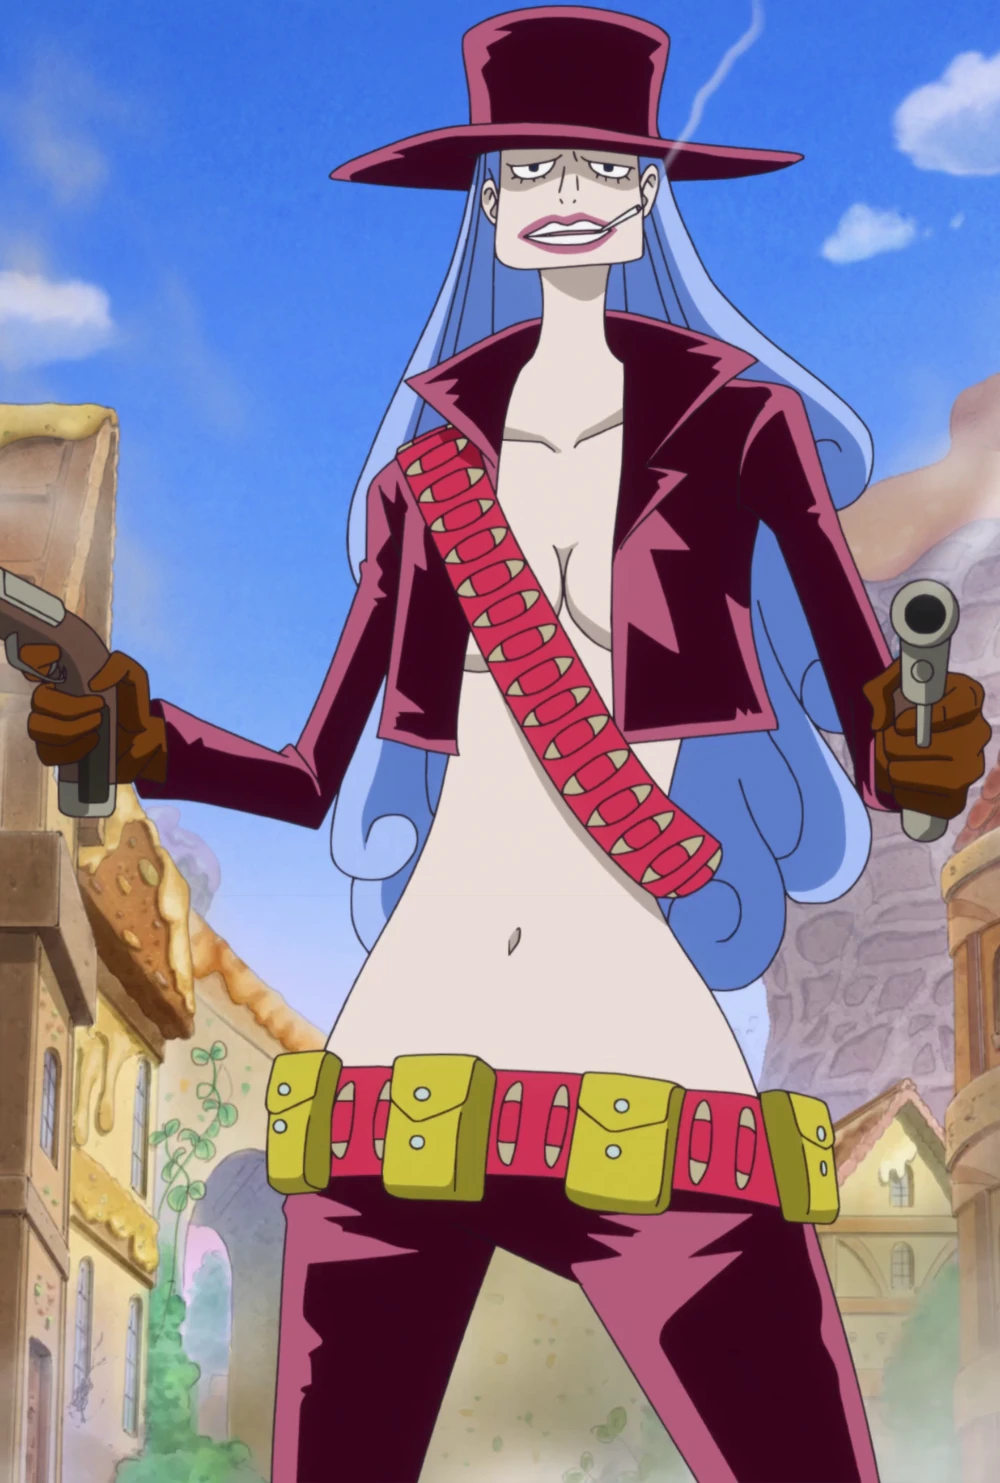 Charlotte Effilee in One Piece.